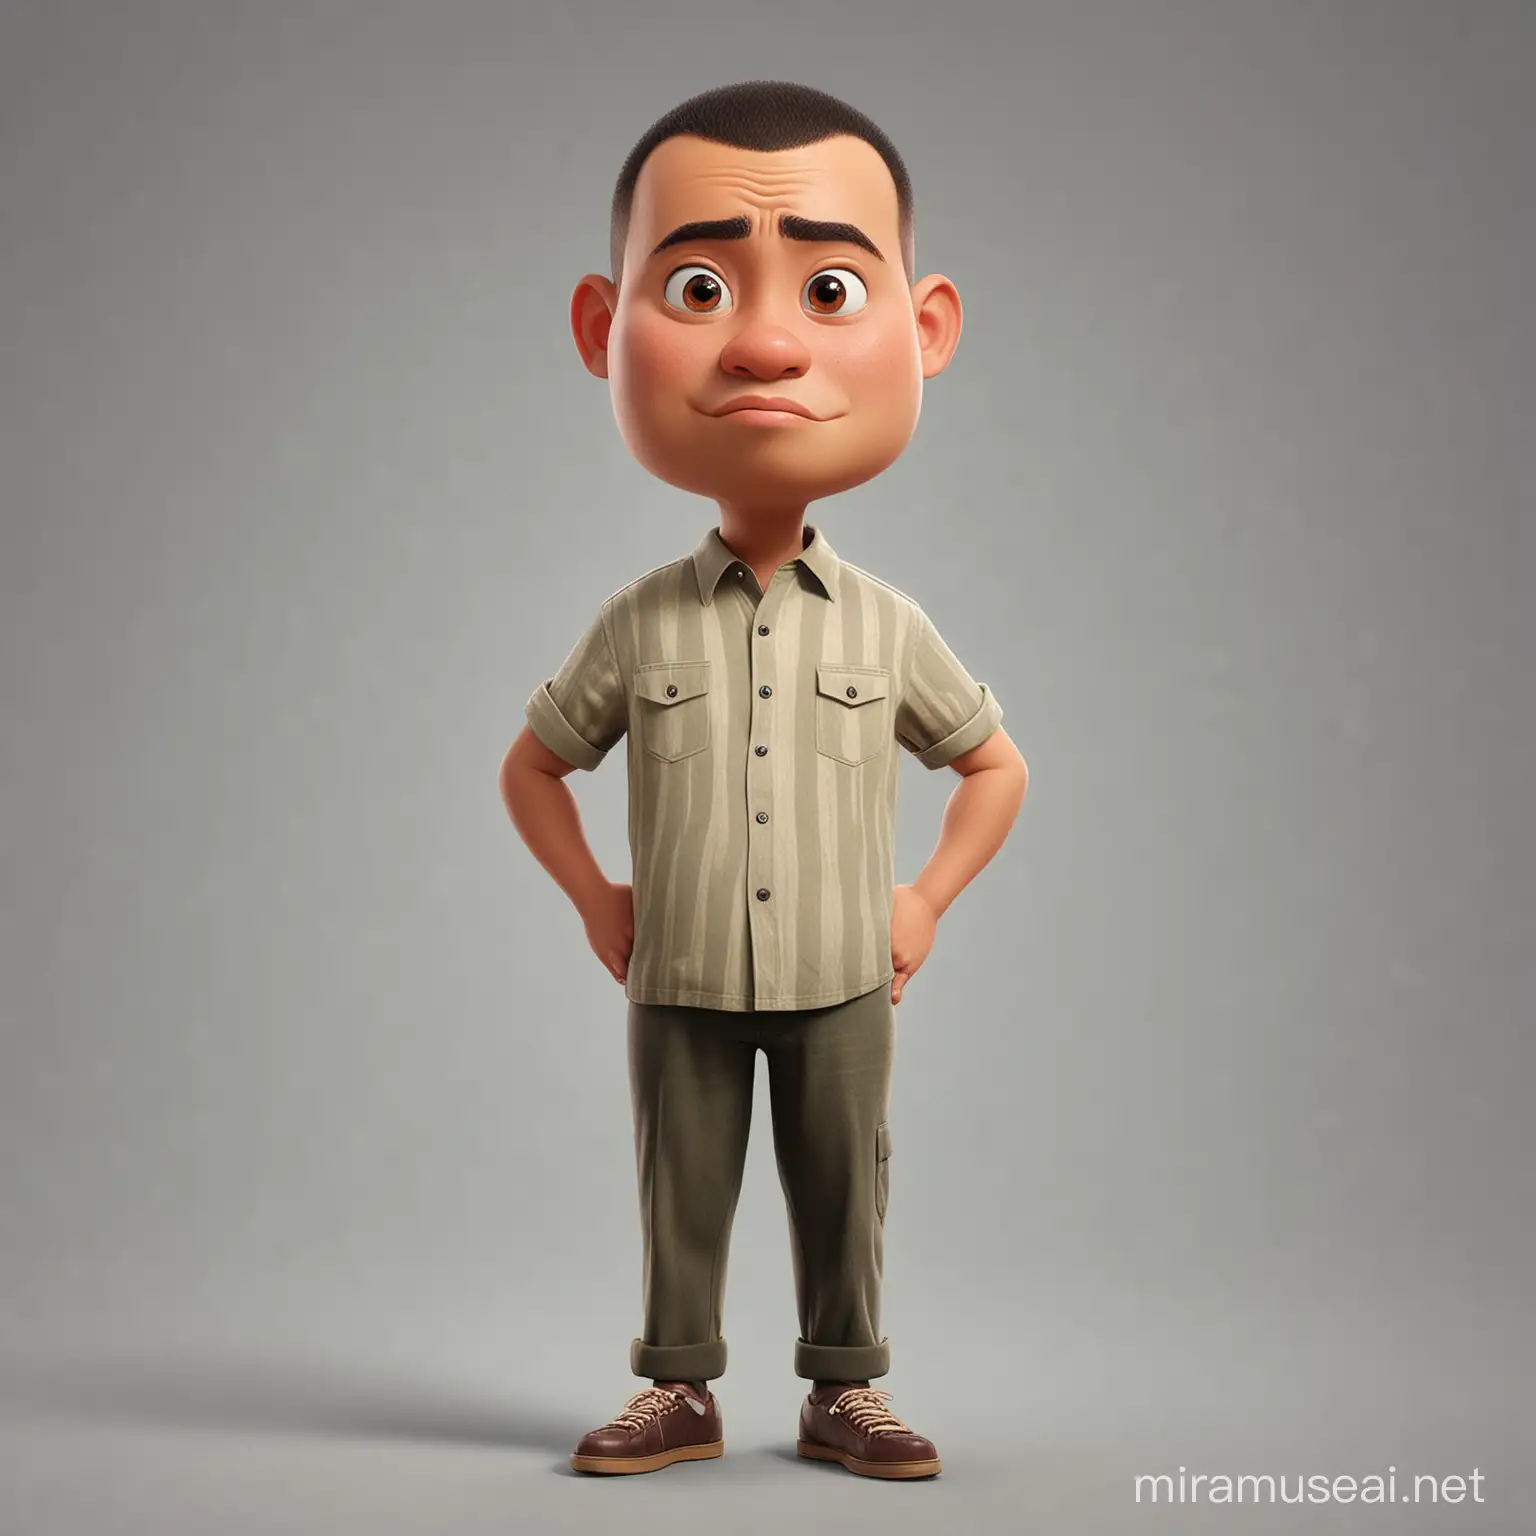 An indonesian guy standing up, buzz cut, semi fat, Semi caricature, disney style, full body, flat eye brow